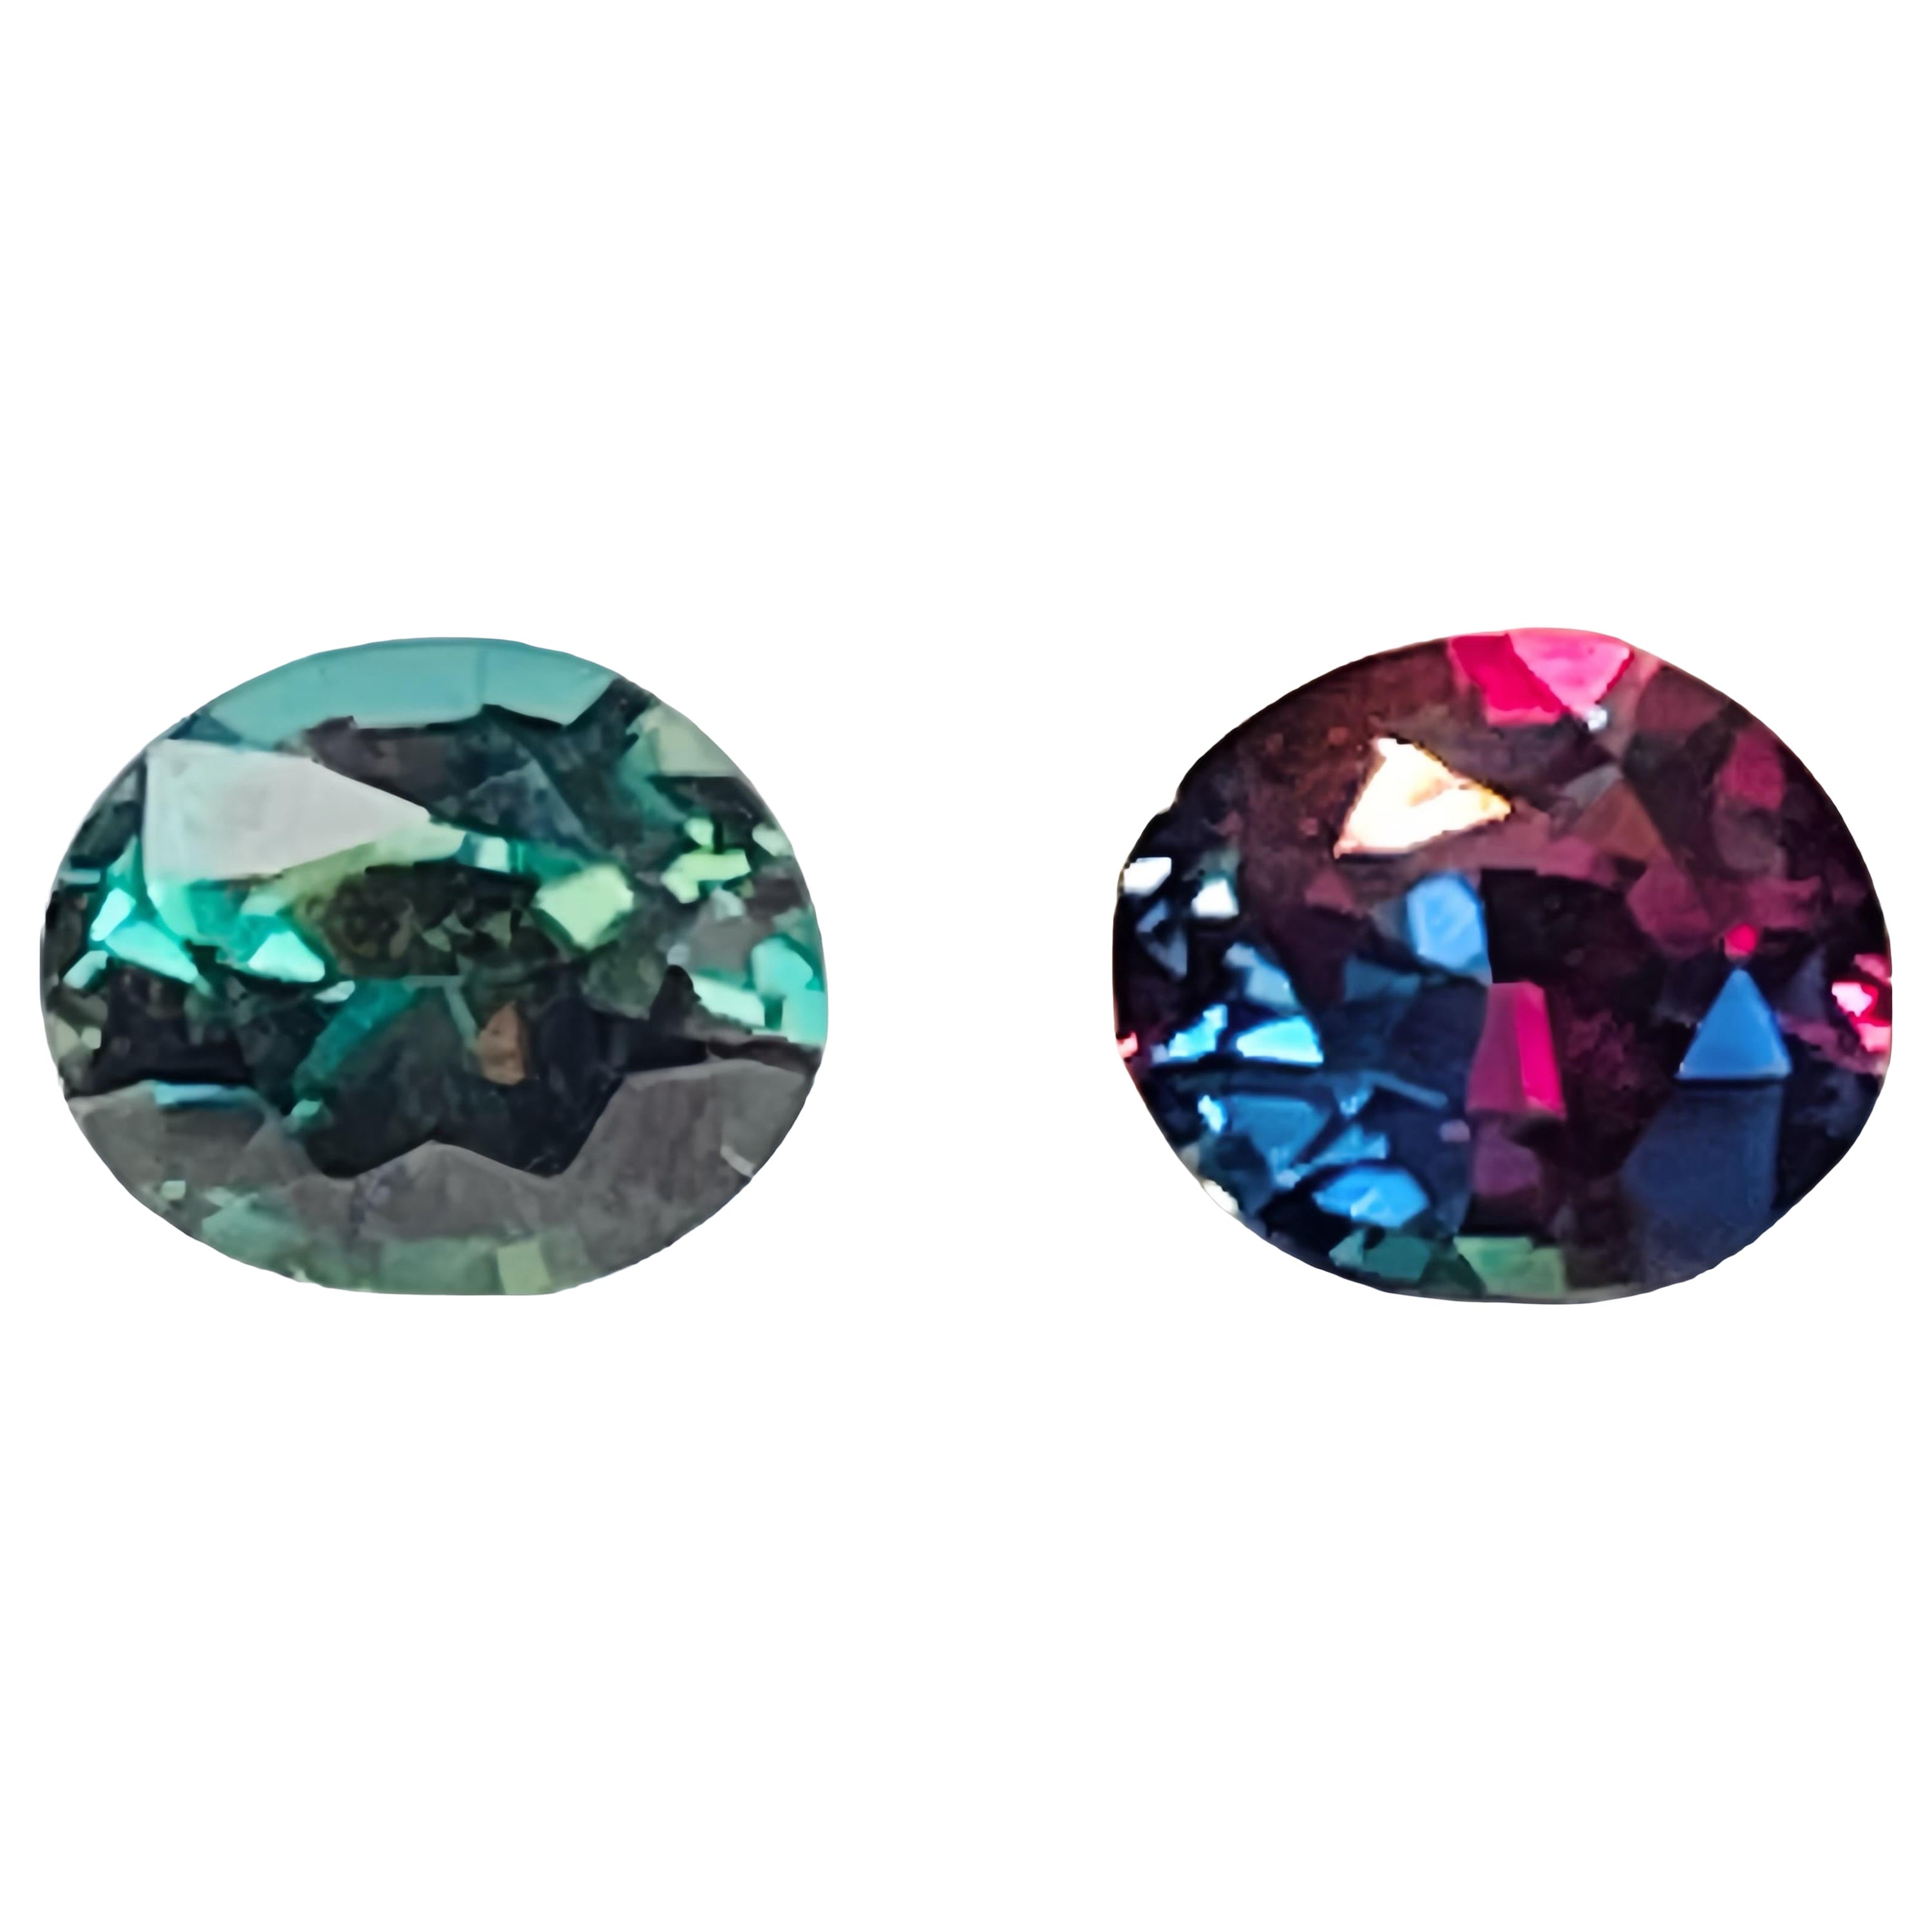 Alexandrite 0.24ct deep green to pinkish color change rare gemstone